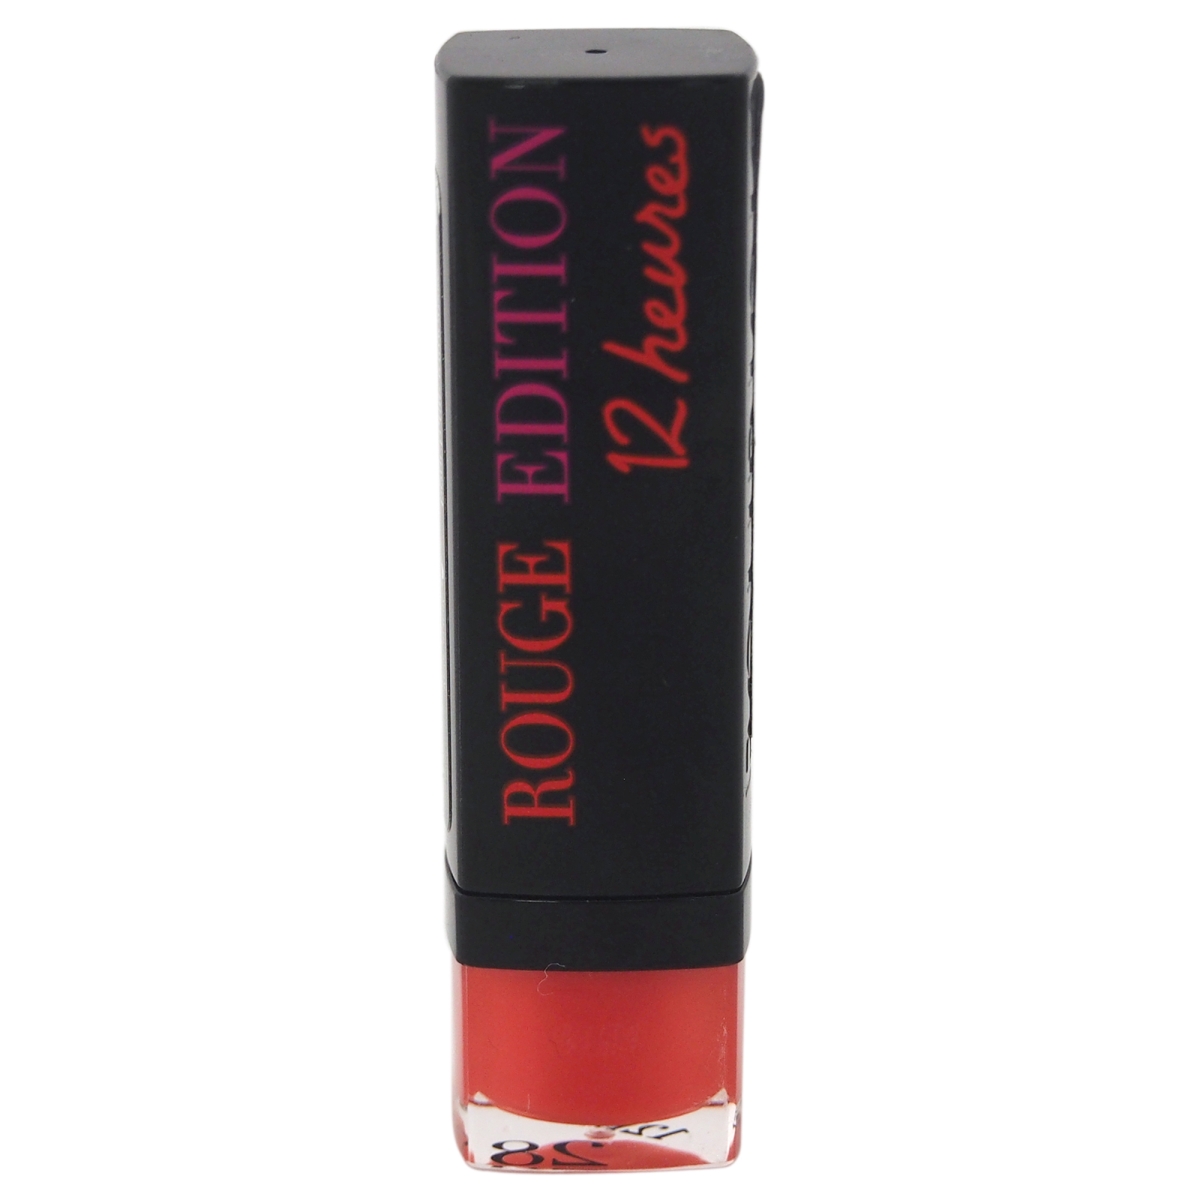 W-c-9702 0.12 Oz No. 28 Rouge Edition 12 Hours Pamplemousse Pour Lipstick For Women